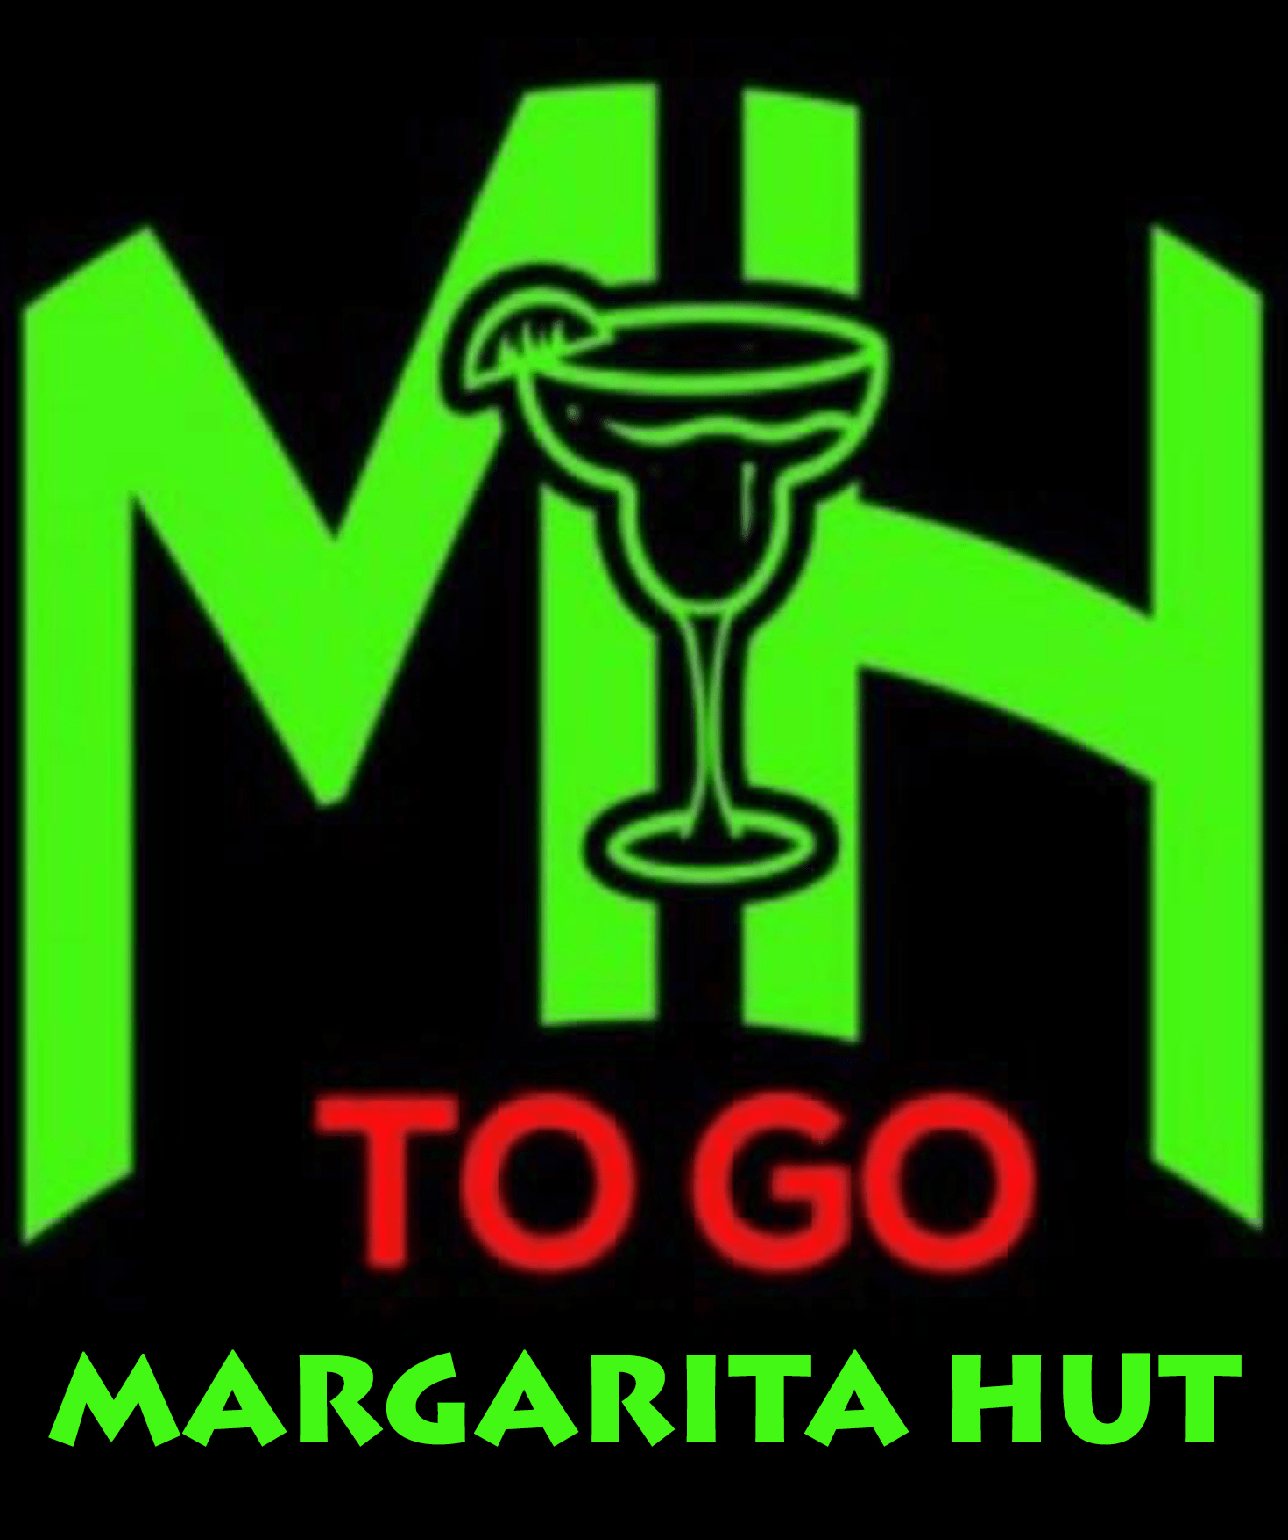 Margarita Hut